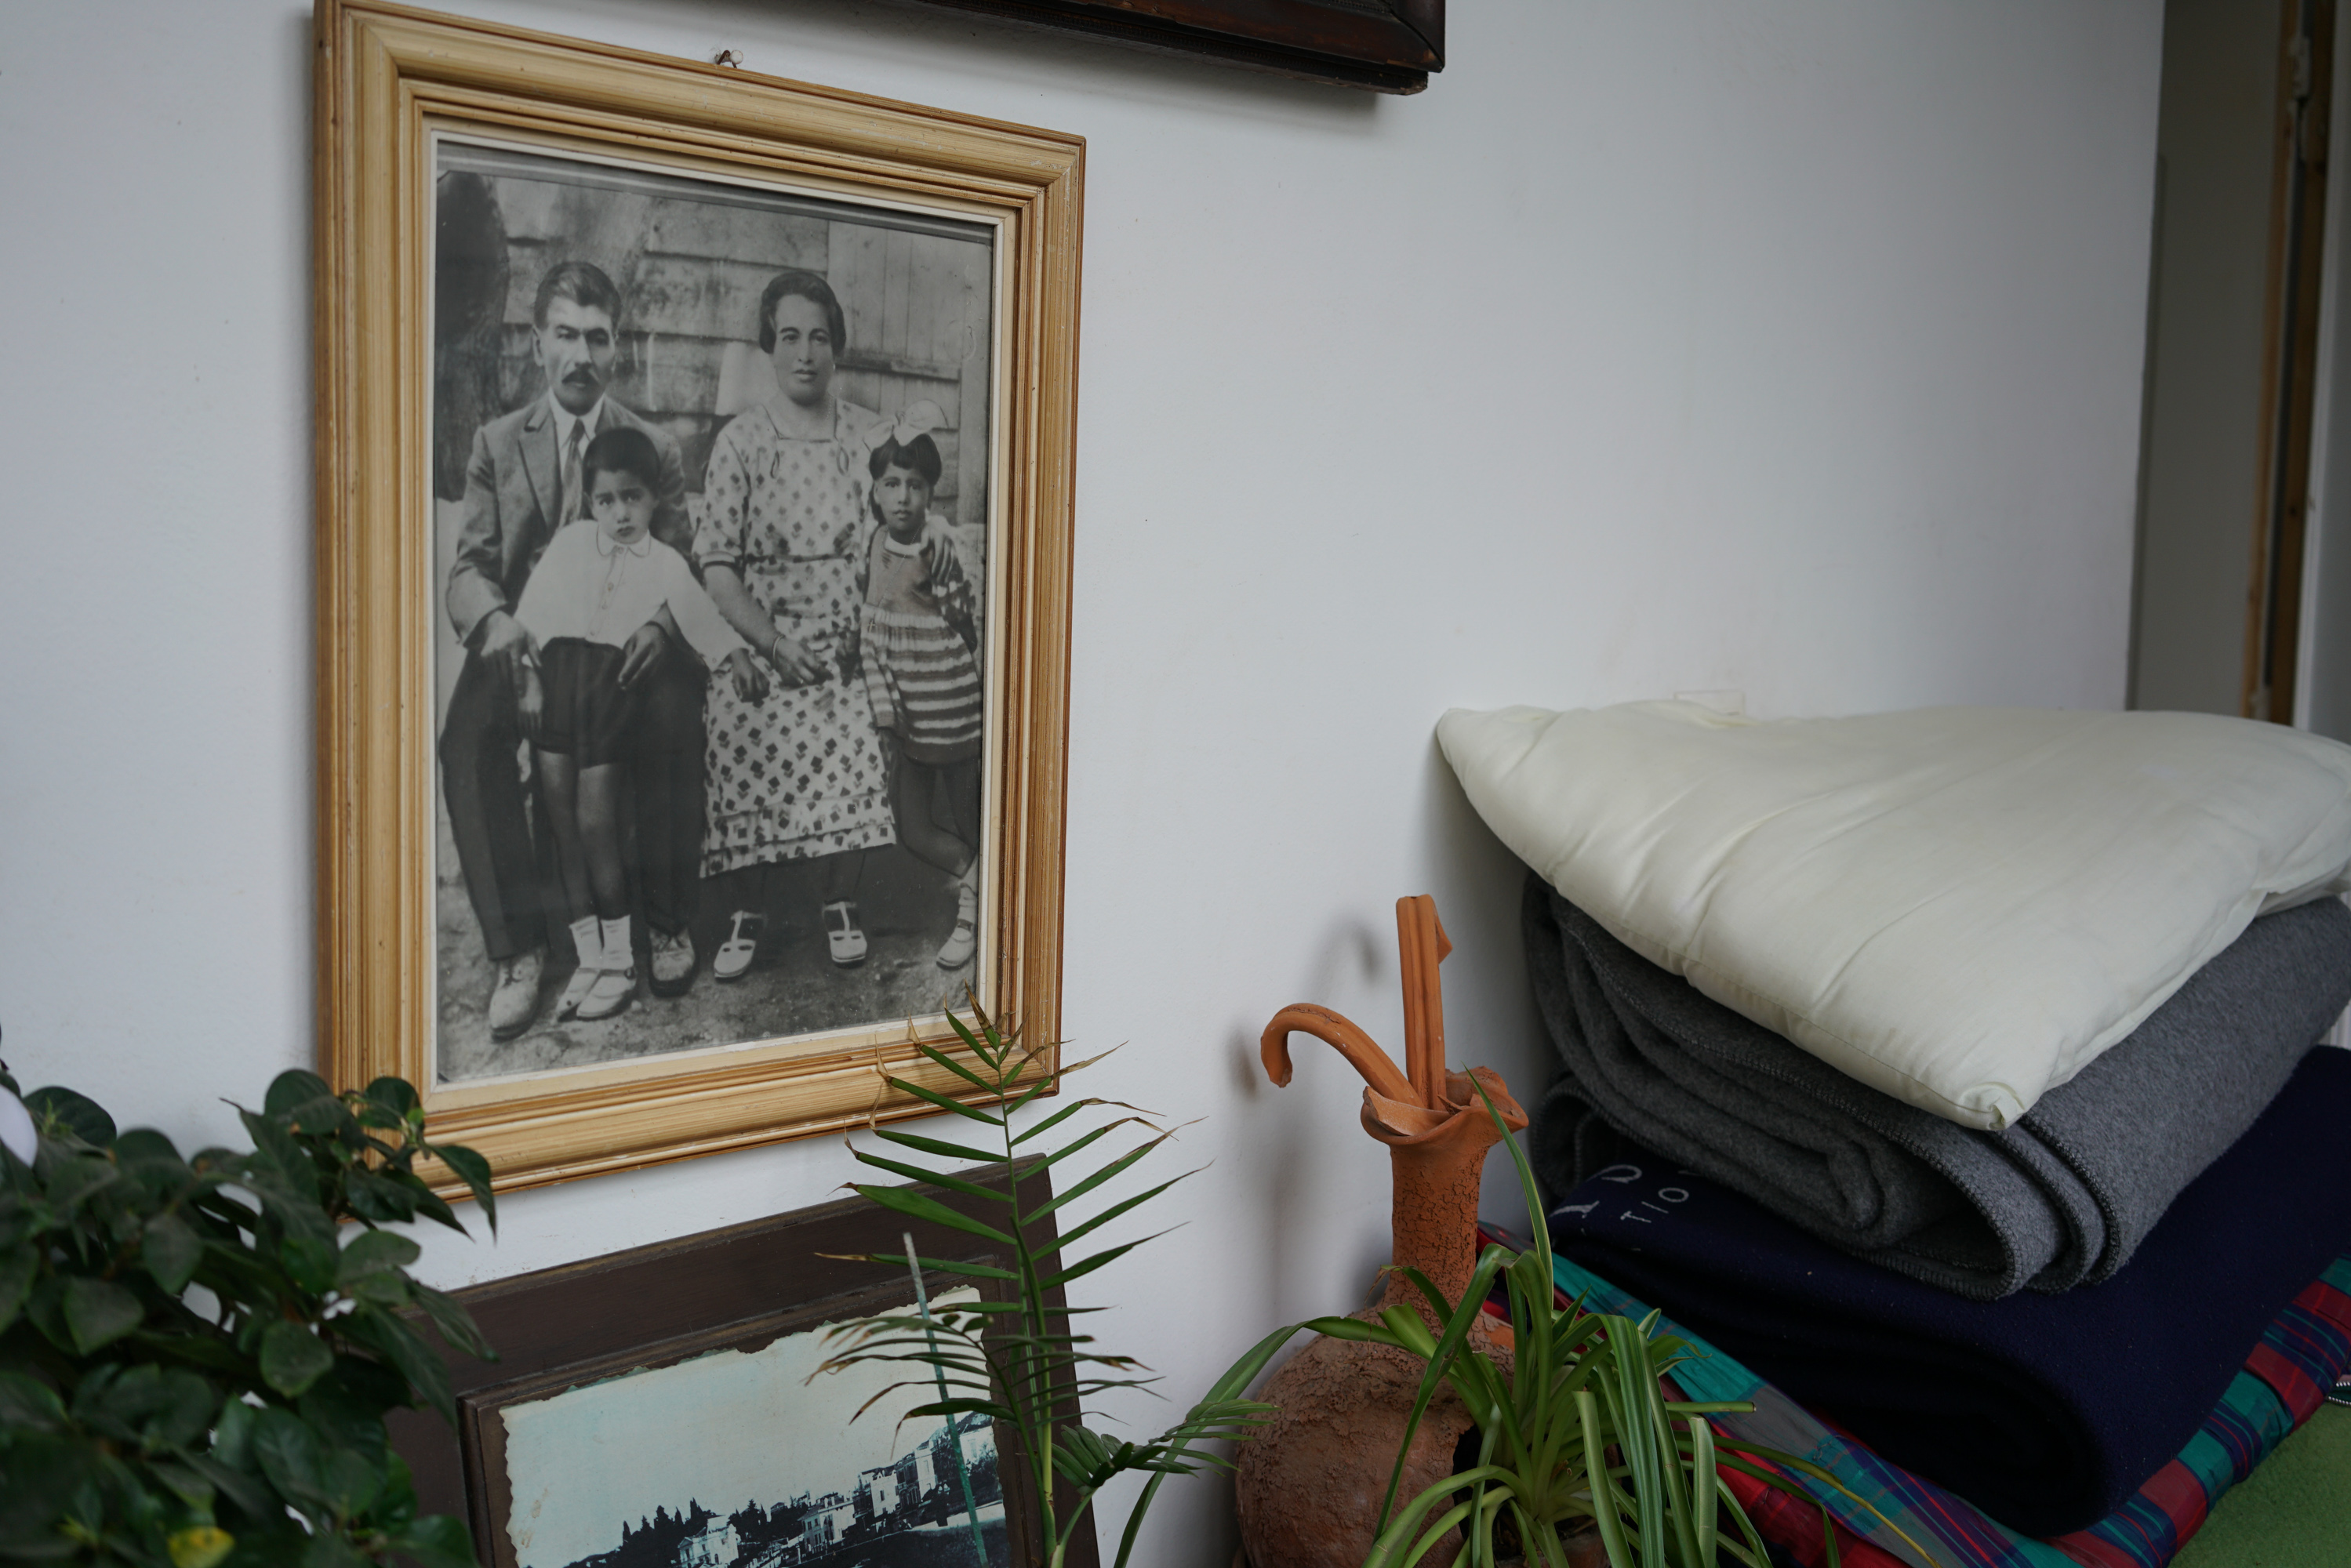 A family portrait of the Makris family from 1938: Dimitrios's grandparents Efthimios and Stratigoula Makris with their son Dimitrios and daughter Akindinoula. [Talitha Brauer/Al Jazeera]